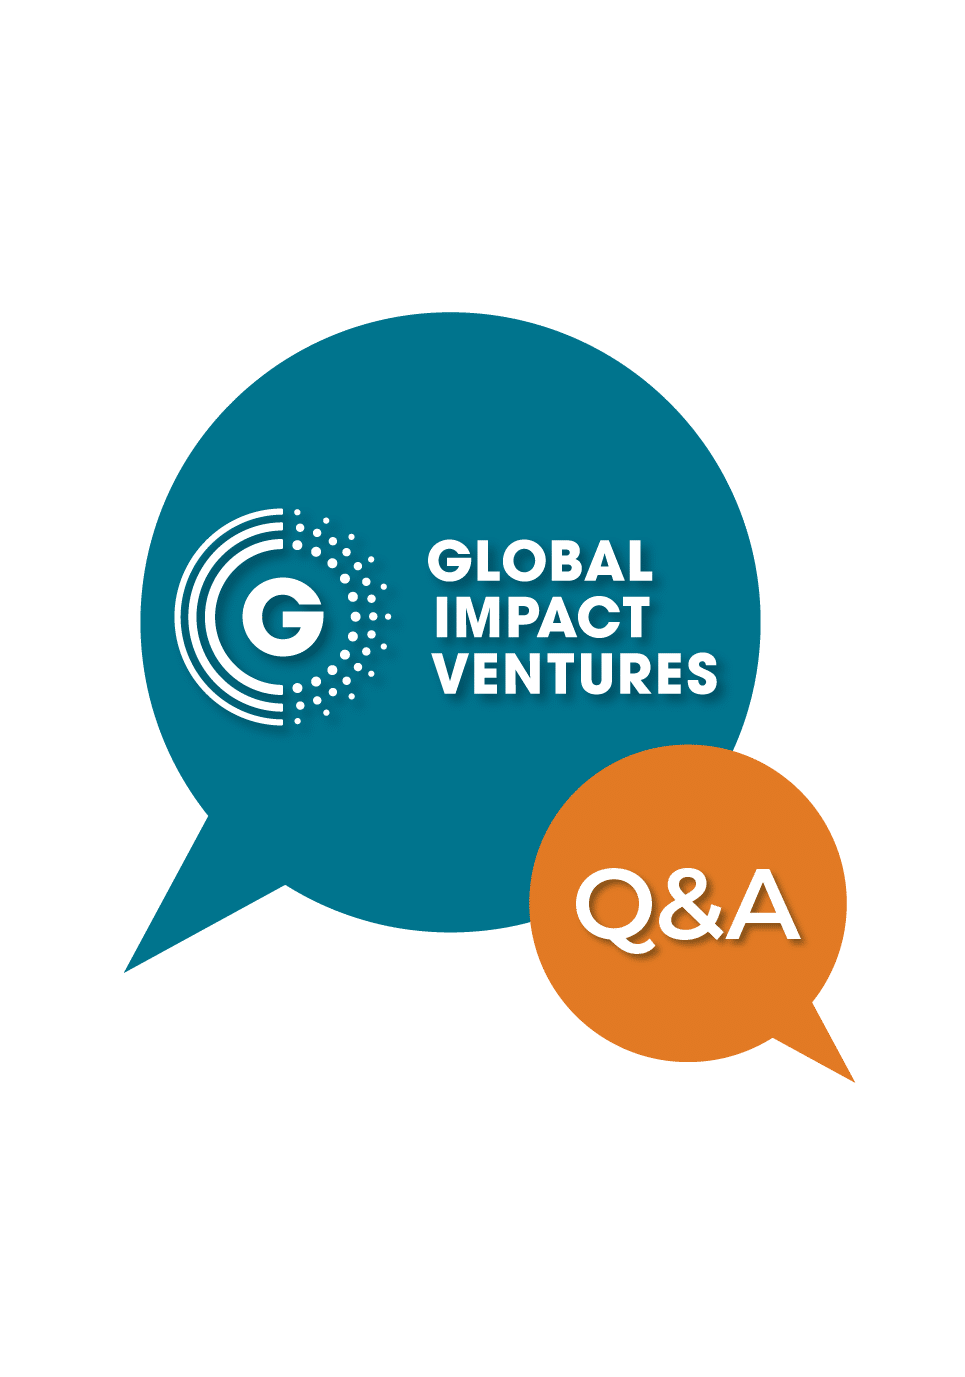 Global Impact Ventures Q&A